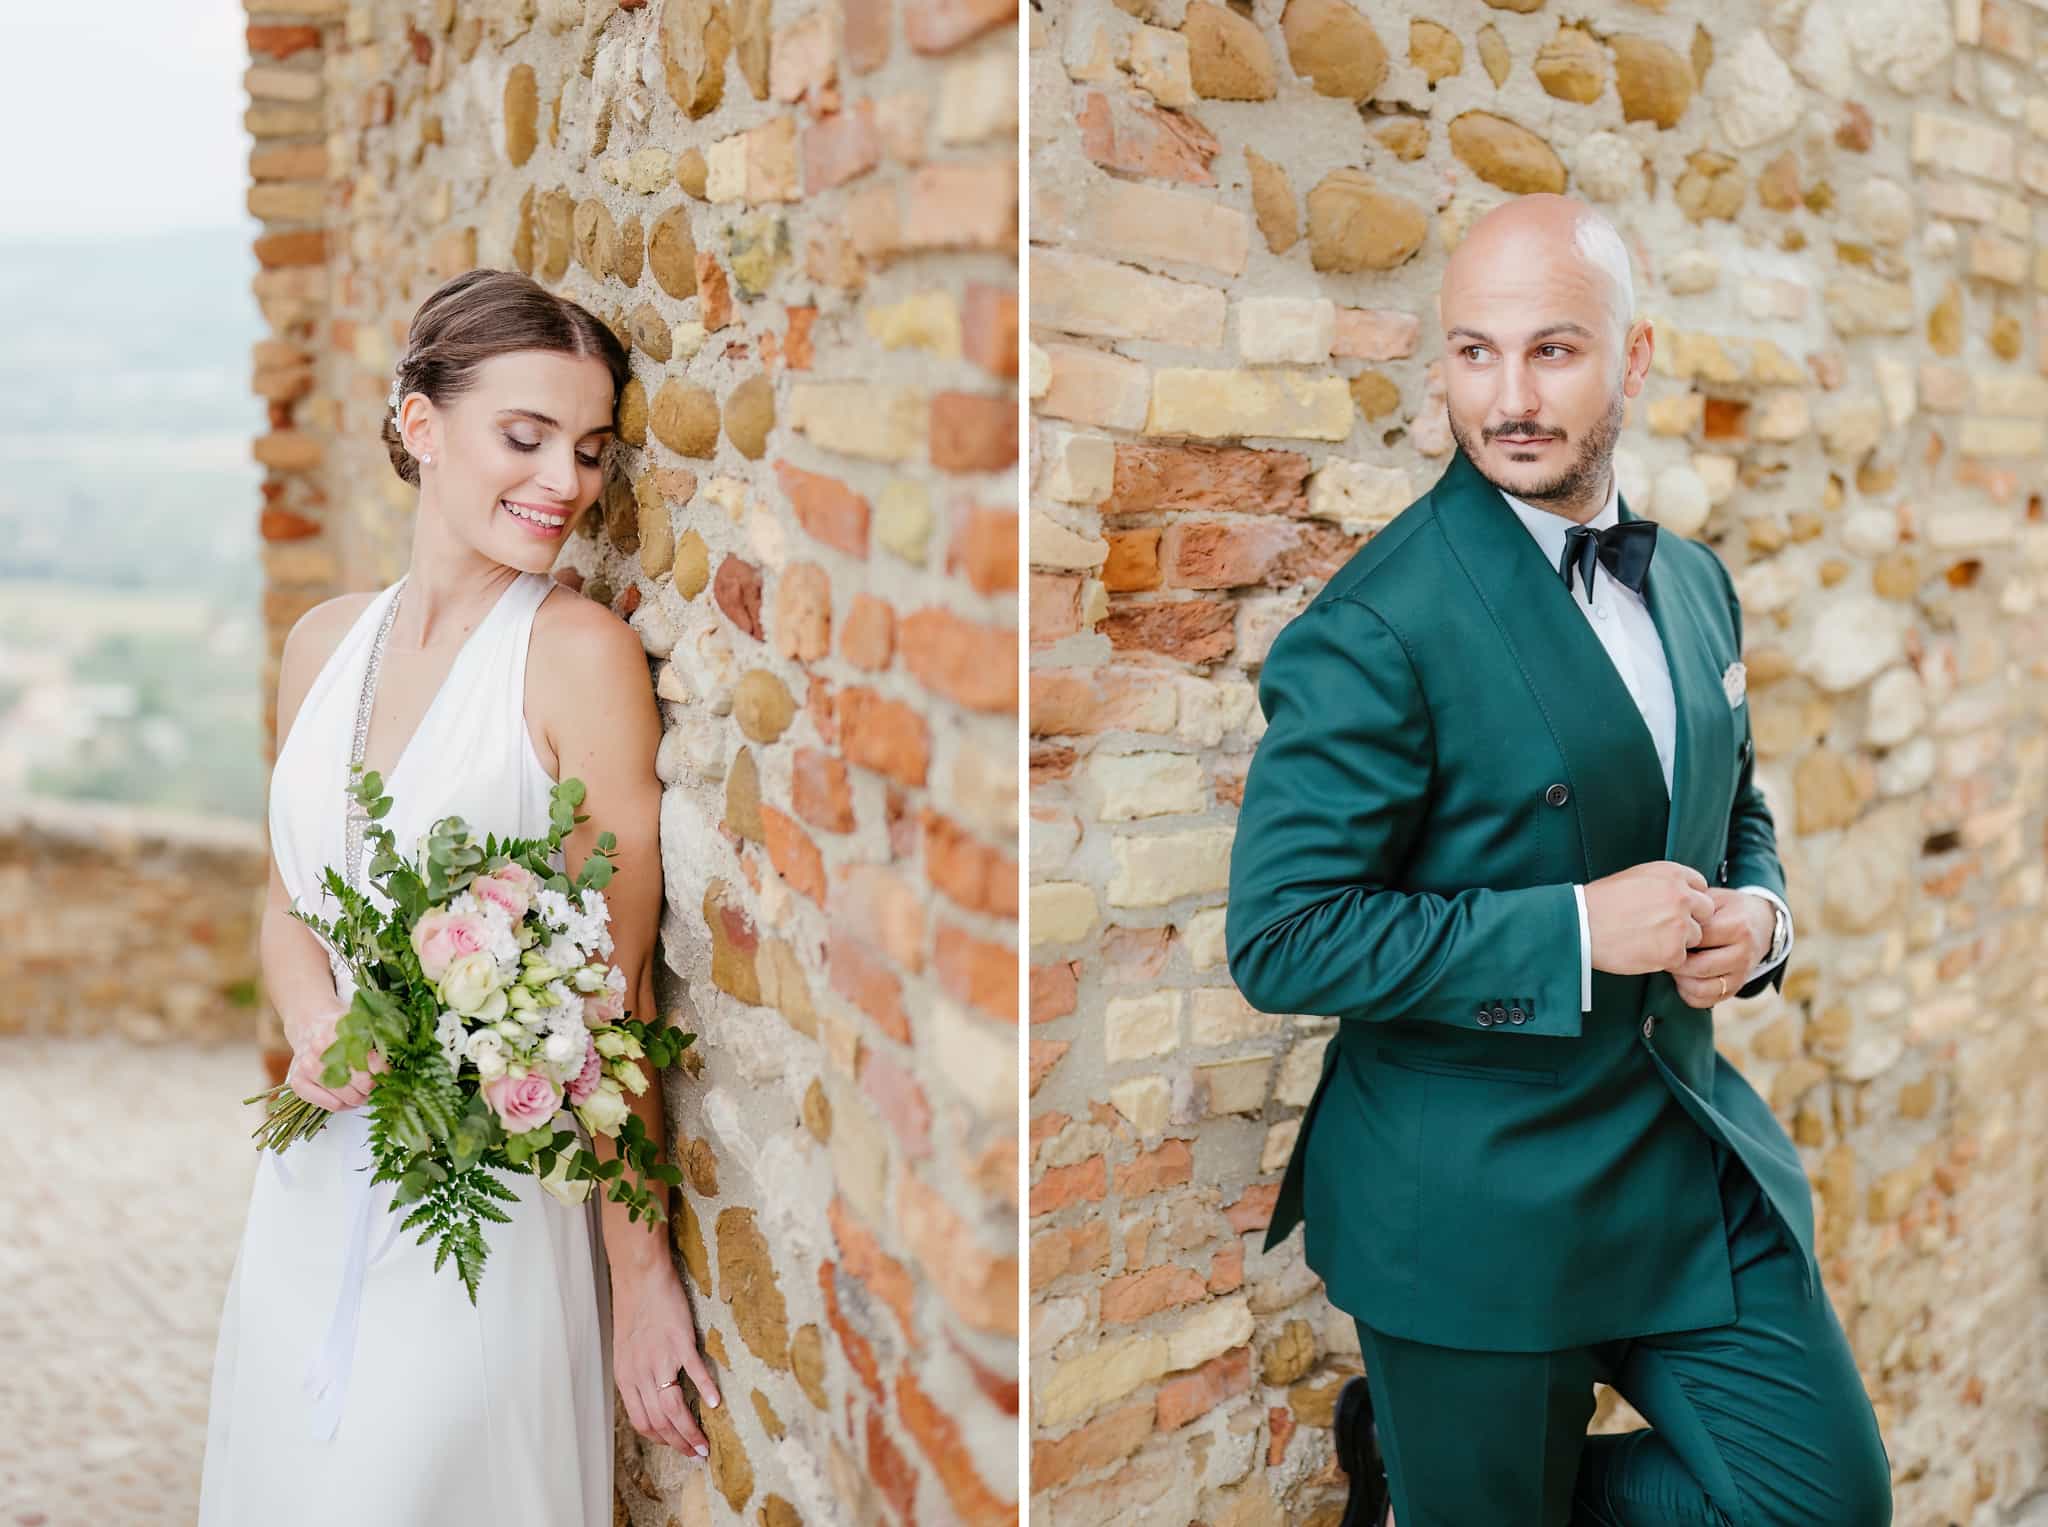 abito-sposa-sposo-sposi-fotografo-matrimonio-montepagano-roseto-pagus-foto-coppia-spontanee-in-posa-bouquet